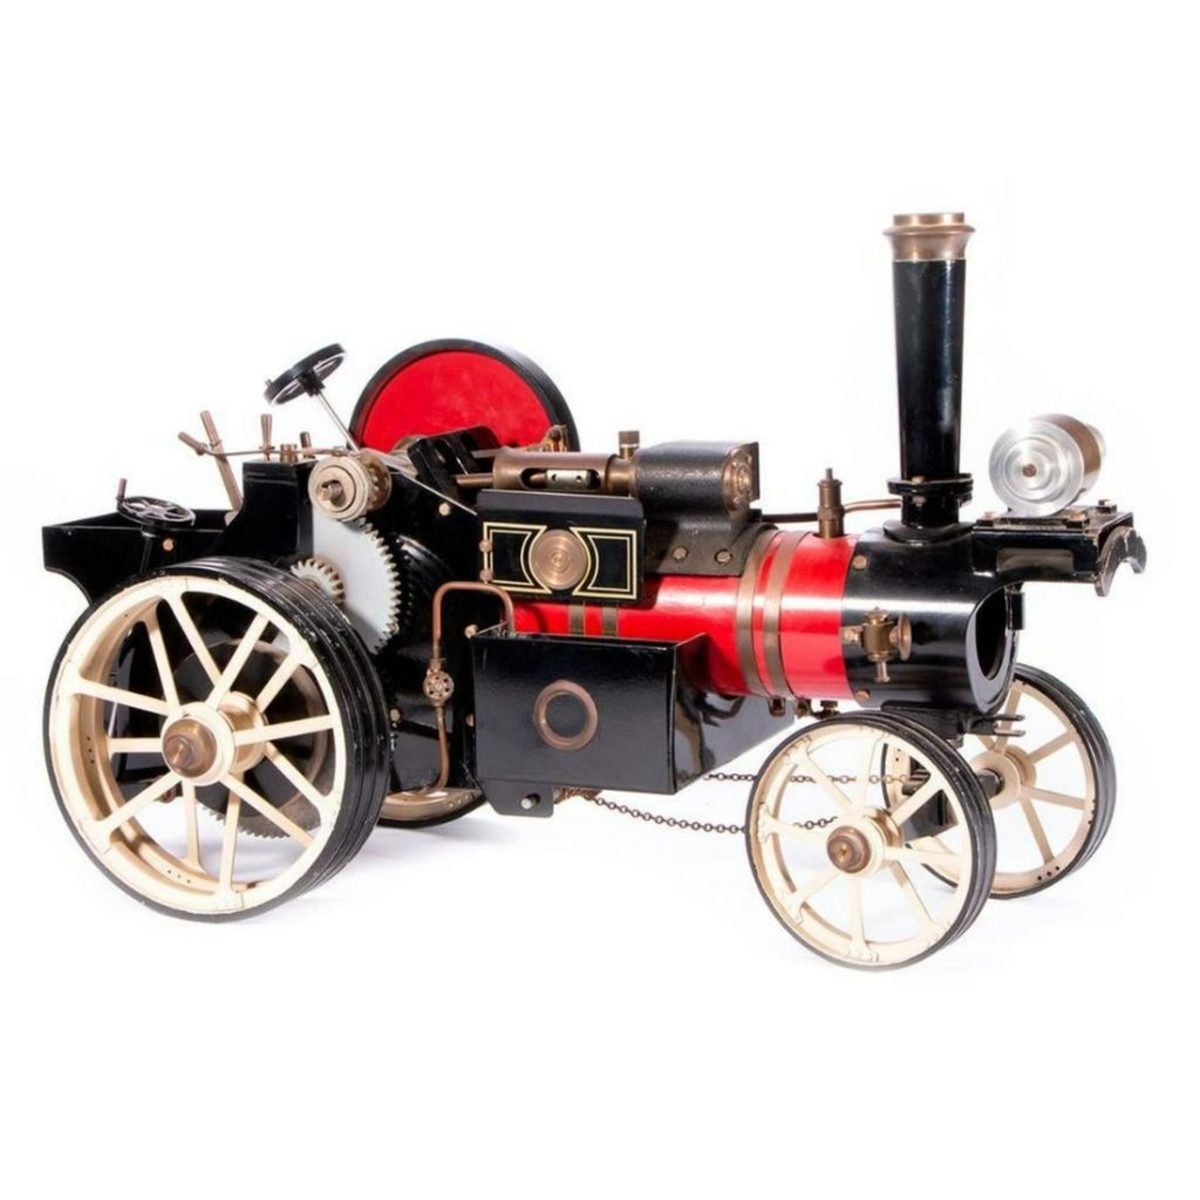  Vintage Model Steam Engine. 12 inches high x 19 x 8 1/2. Estimate: $300-500.